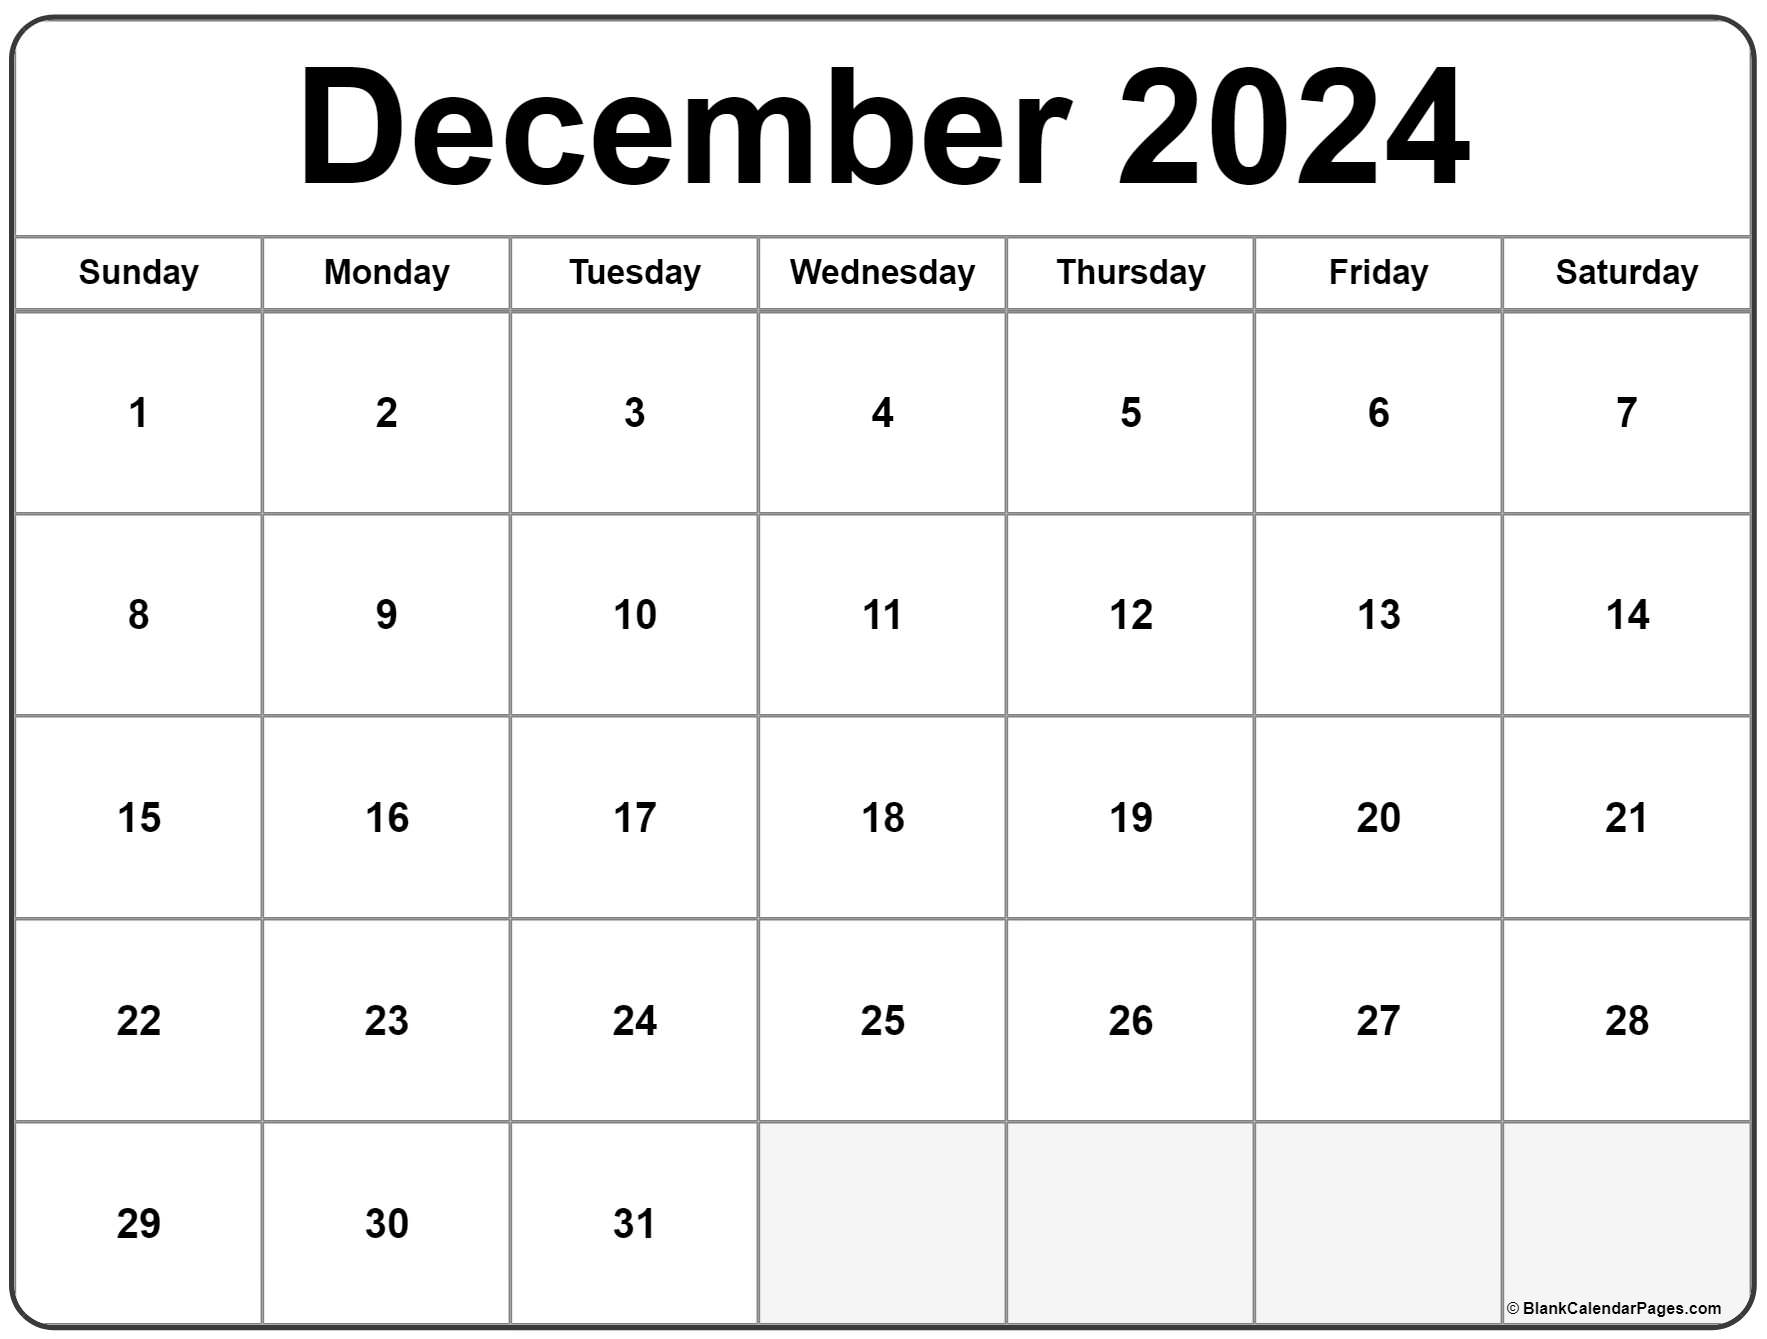 October November December 2022 Calendar Printable December 2022 Calendar | Free Printable Calendar Templates